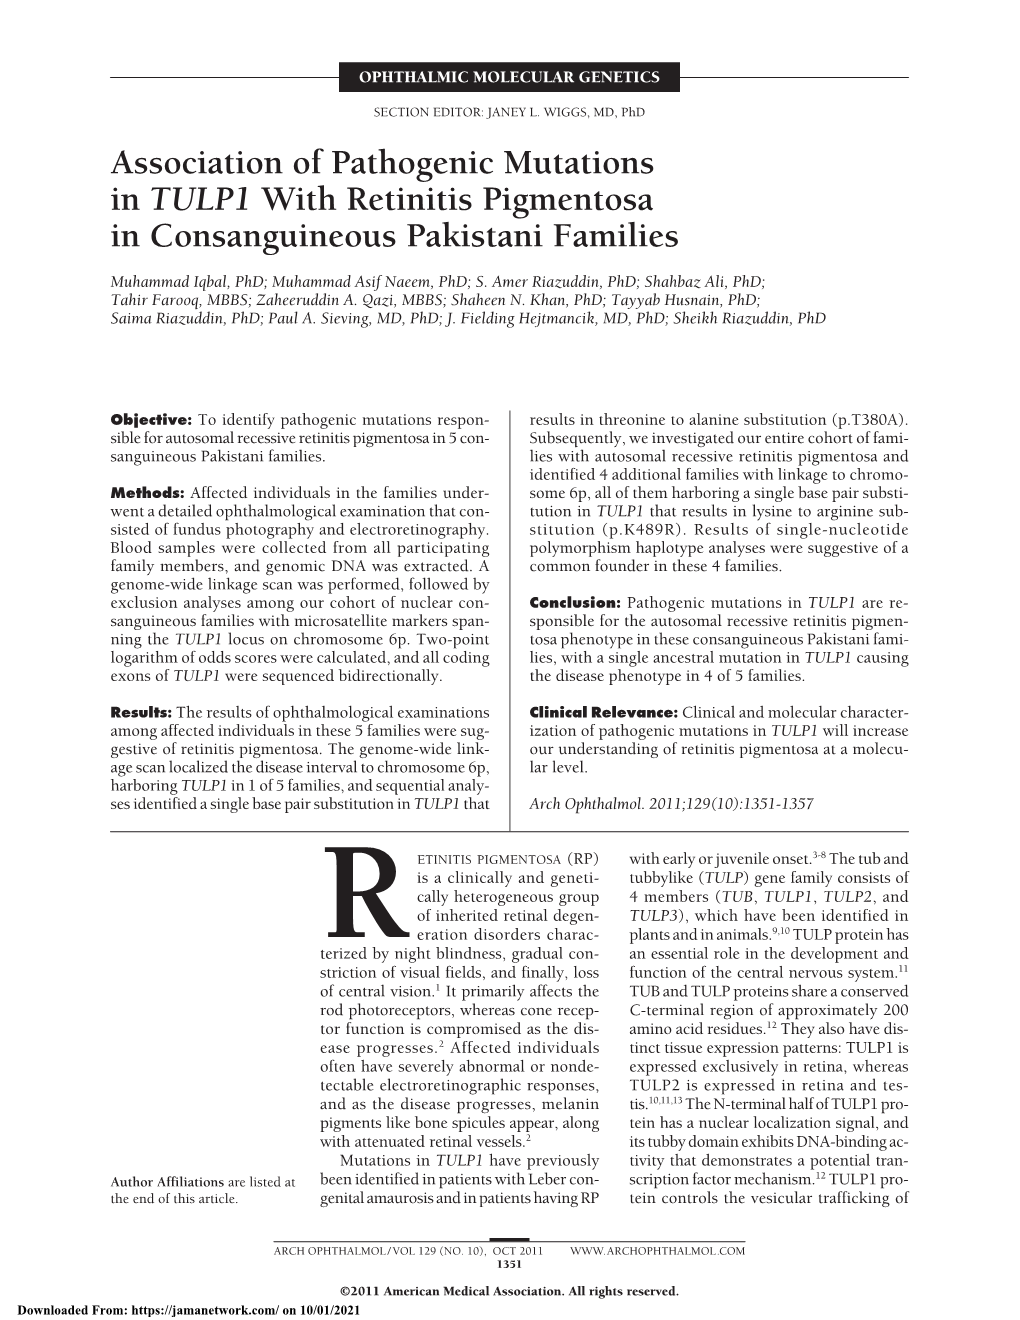 Association of Pathogenic Mutations in TULP1 with Retinitis Pigmentosa in Consanguineous Pakistani Families